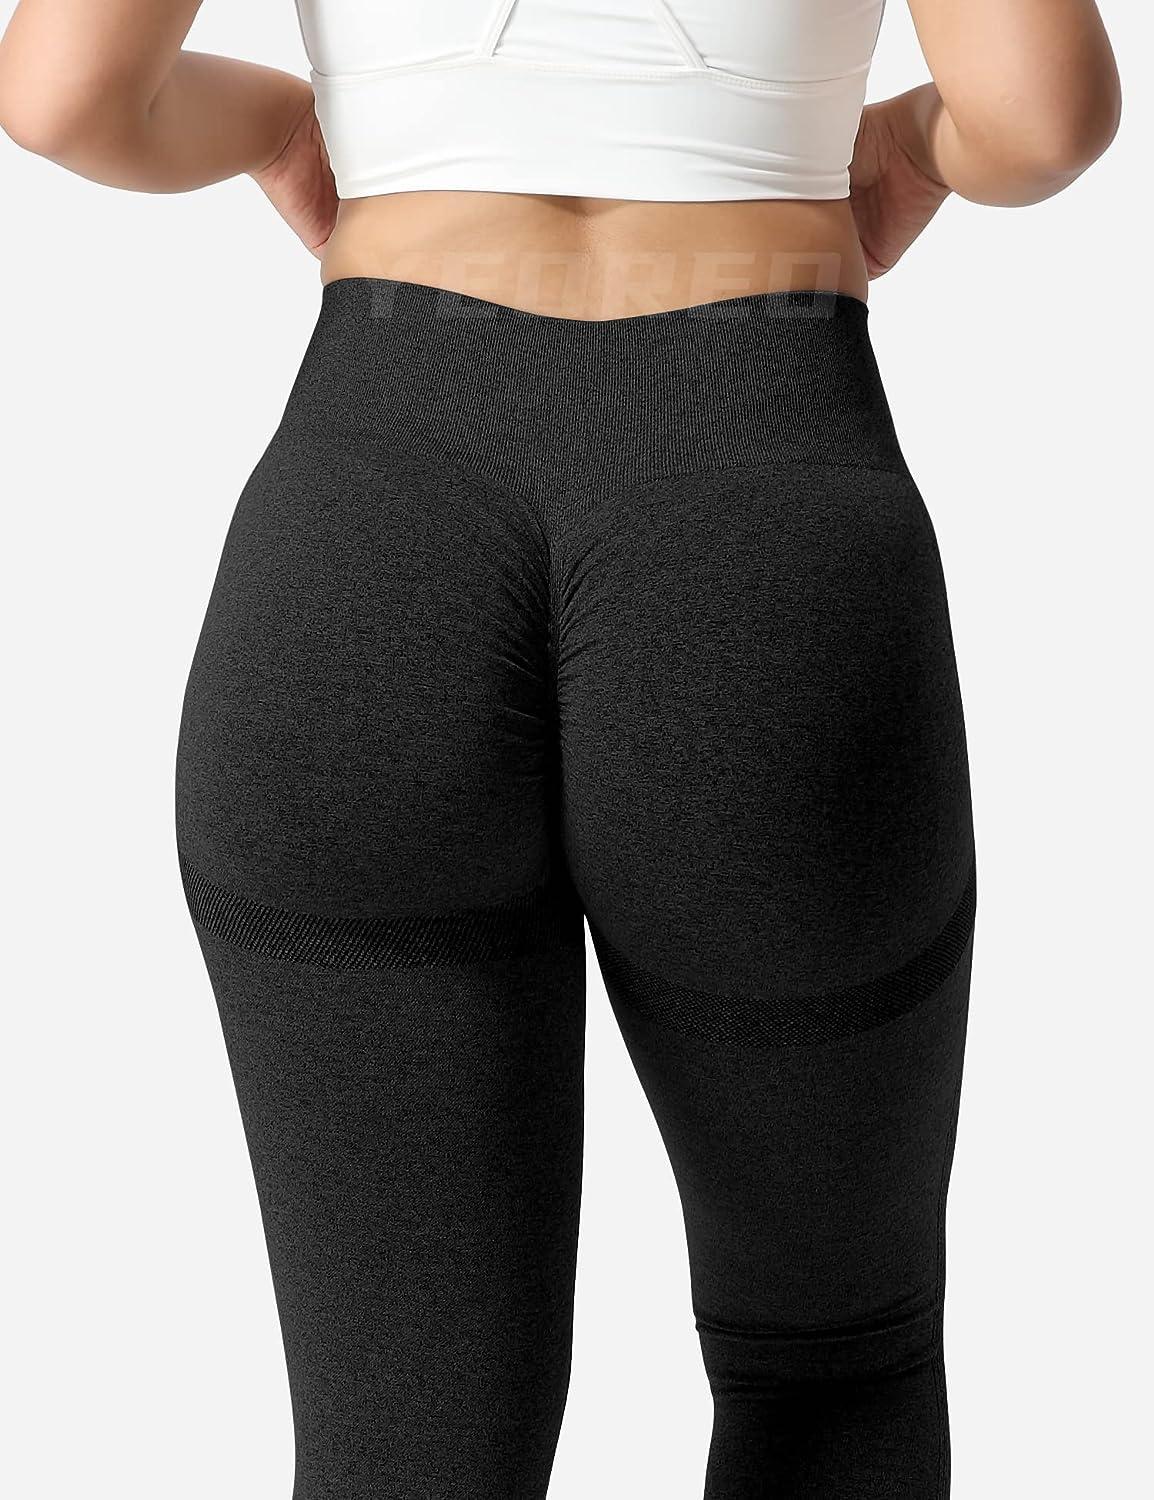 YEOREO Women High Waist Workout Gym Smile Contour Seamless Leggings Yoga  Pants Tights, #0 Leopard Black, Medium